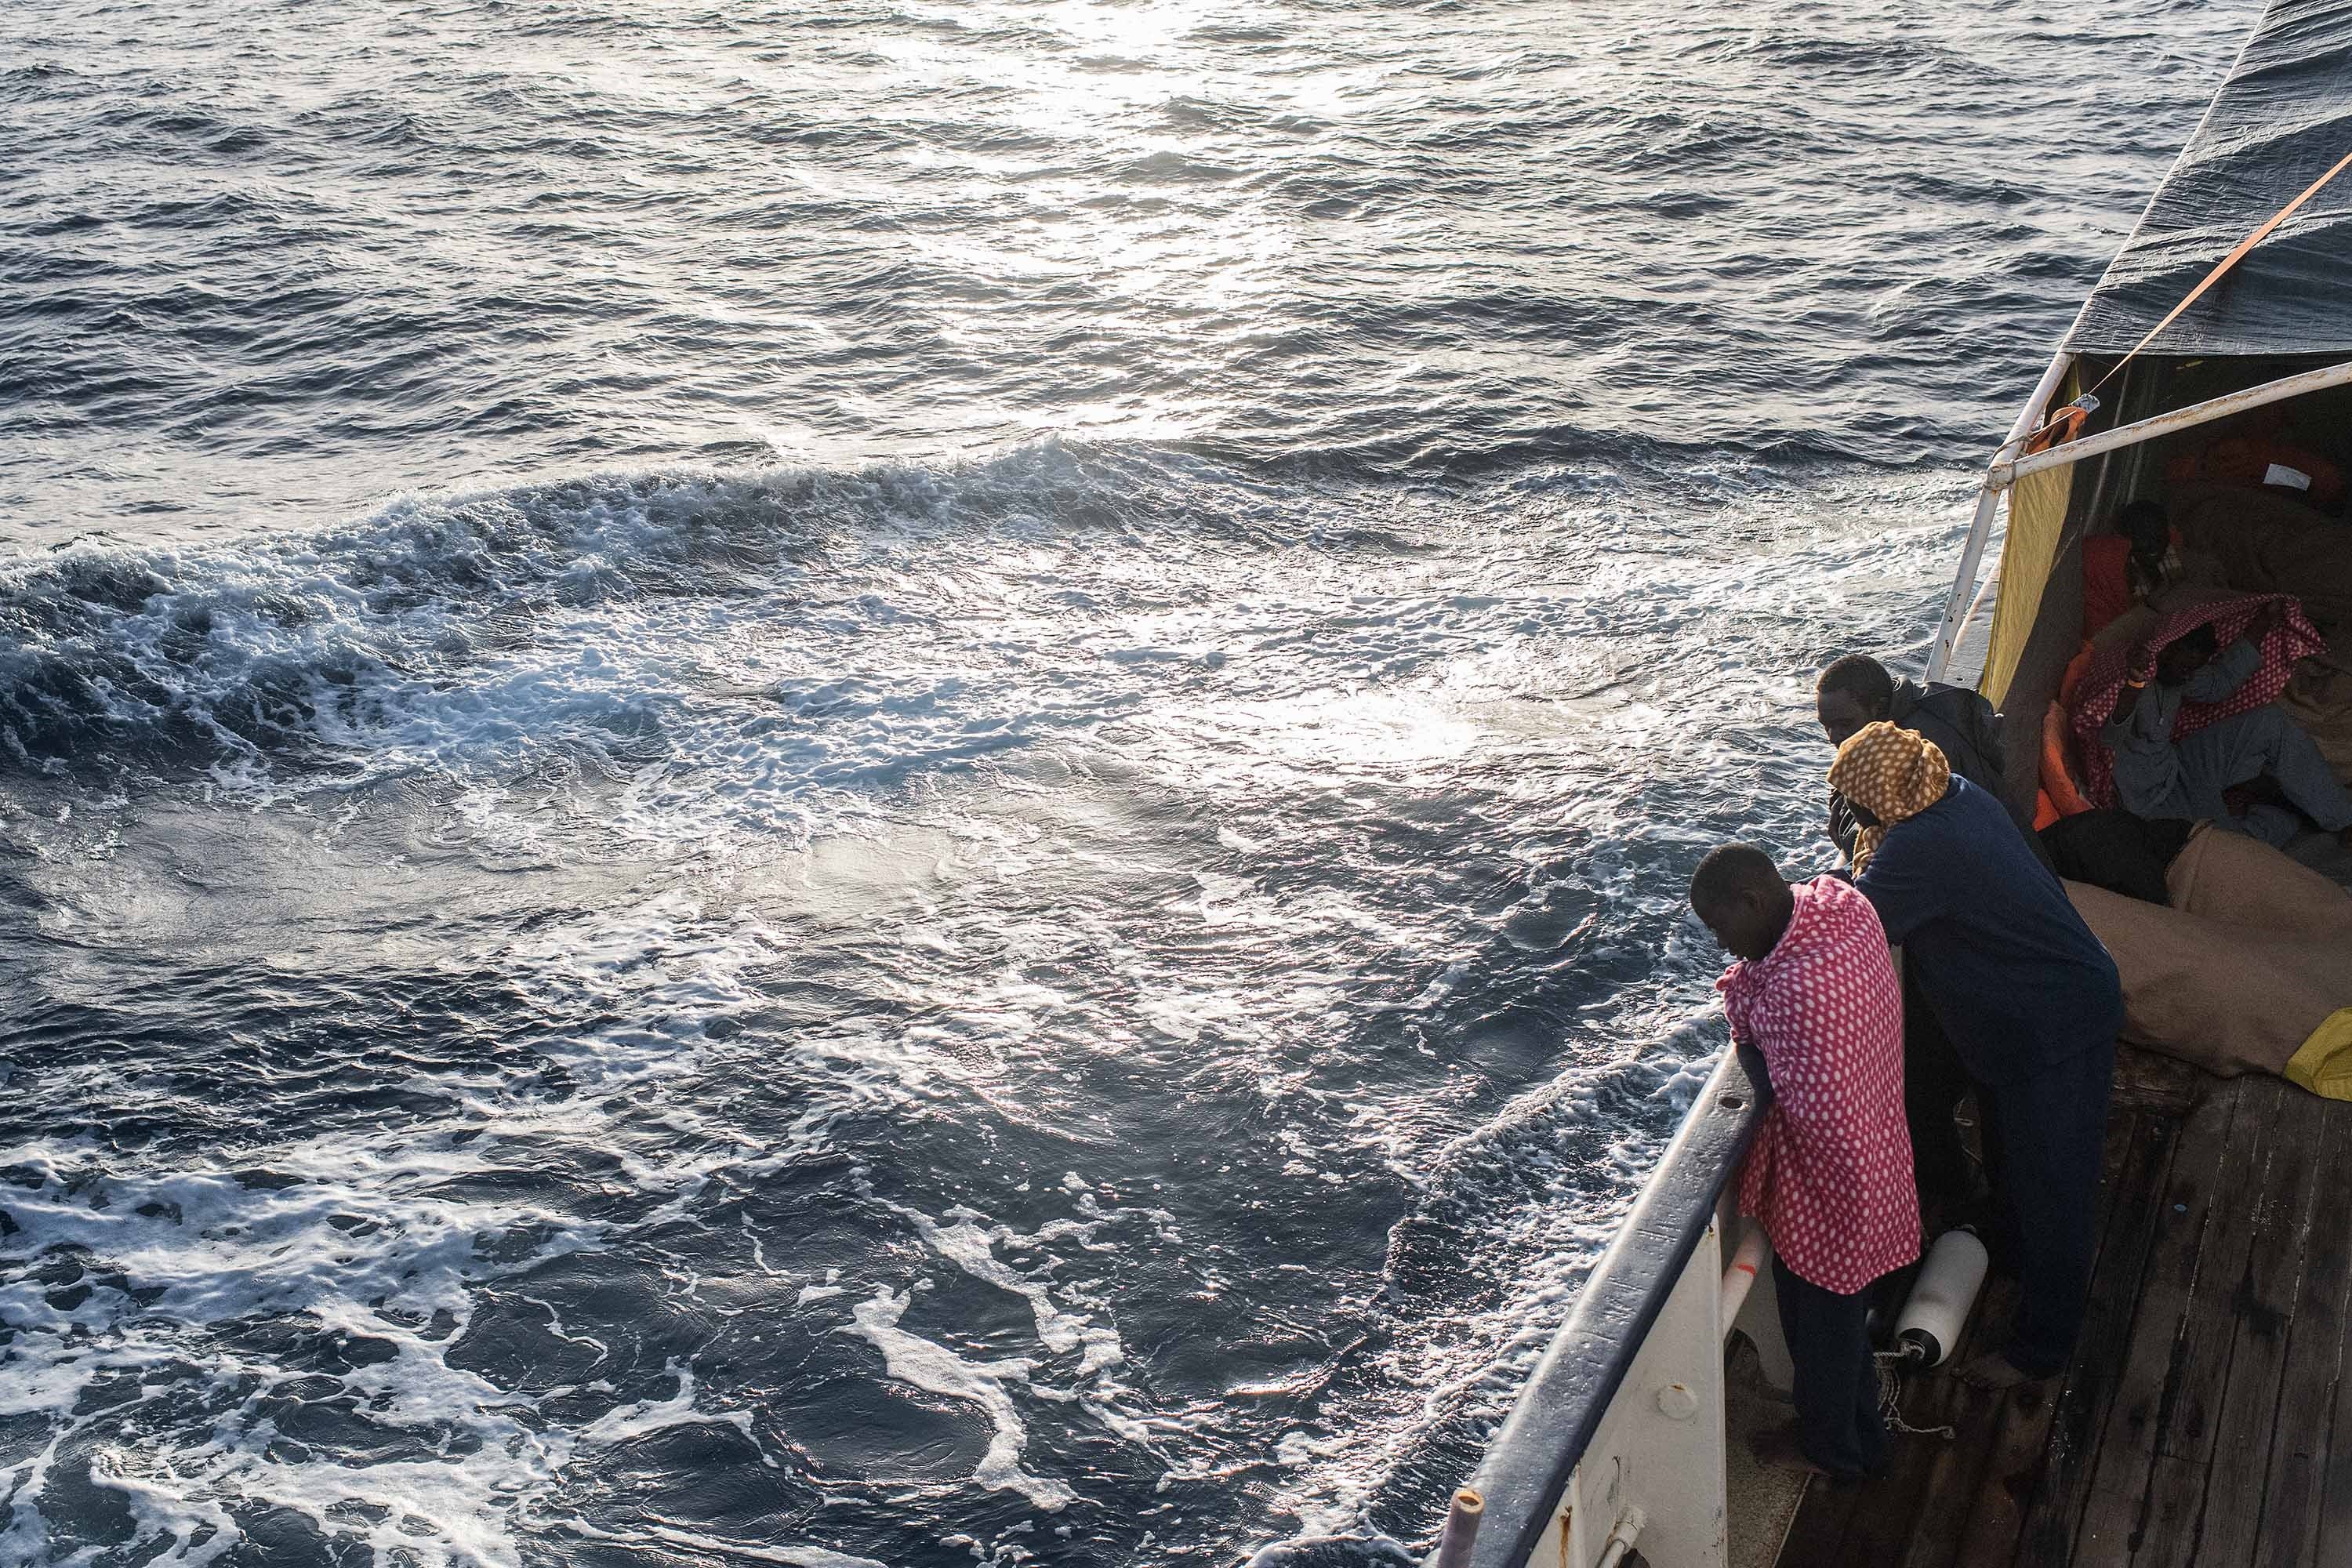 EuropaPress refugiados migrantes miran borda mediterraneo borda open arms rescate